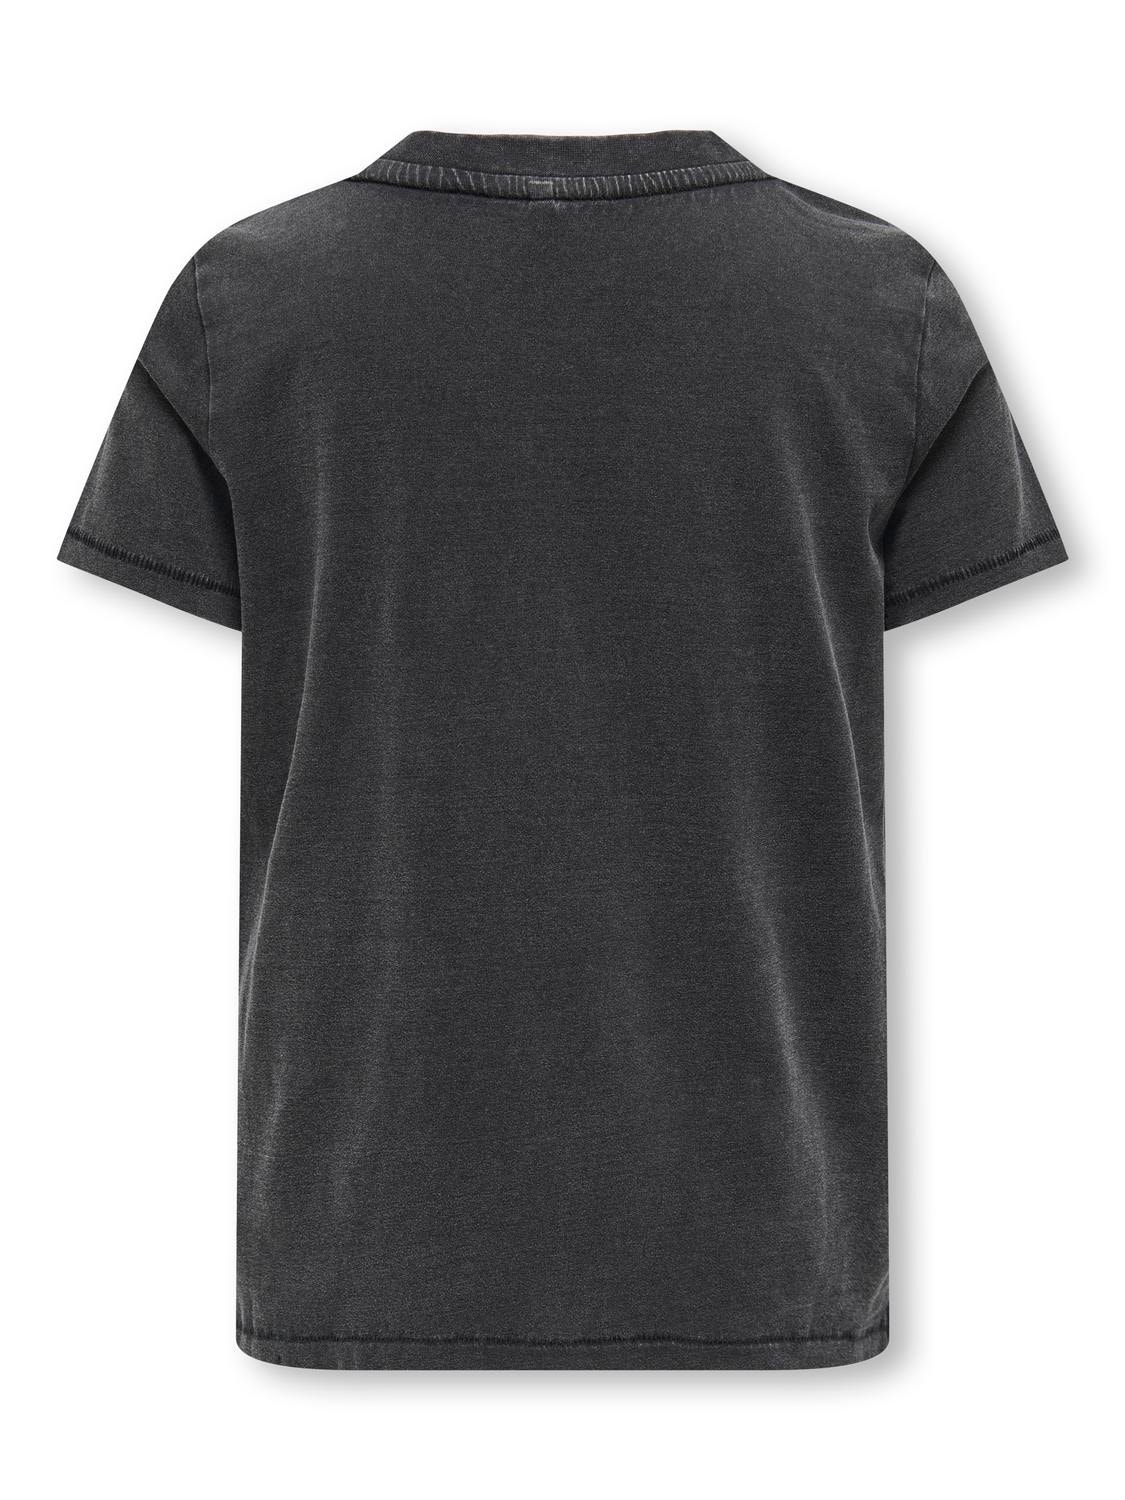 ONLY Box Fit O-ringning T-shirt -Jet Black - 15331149